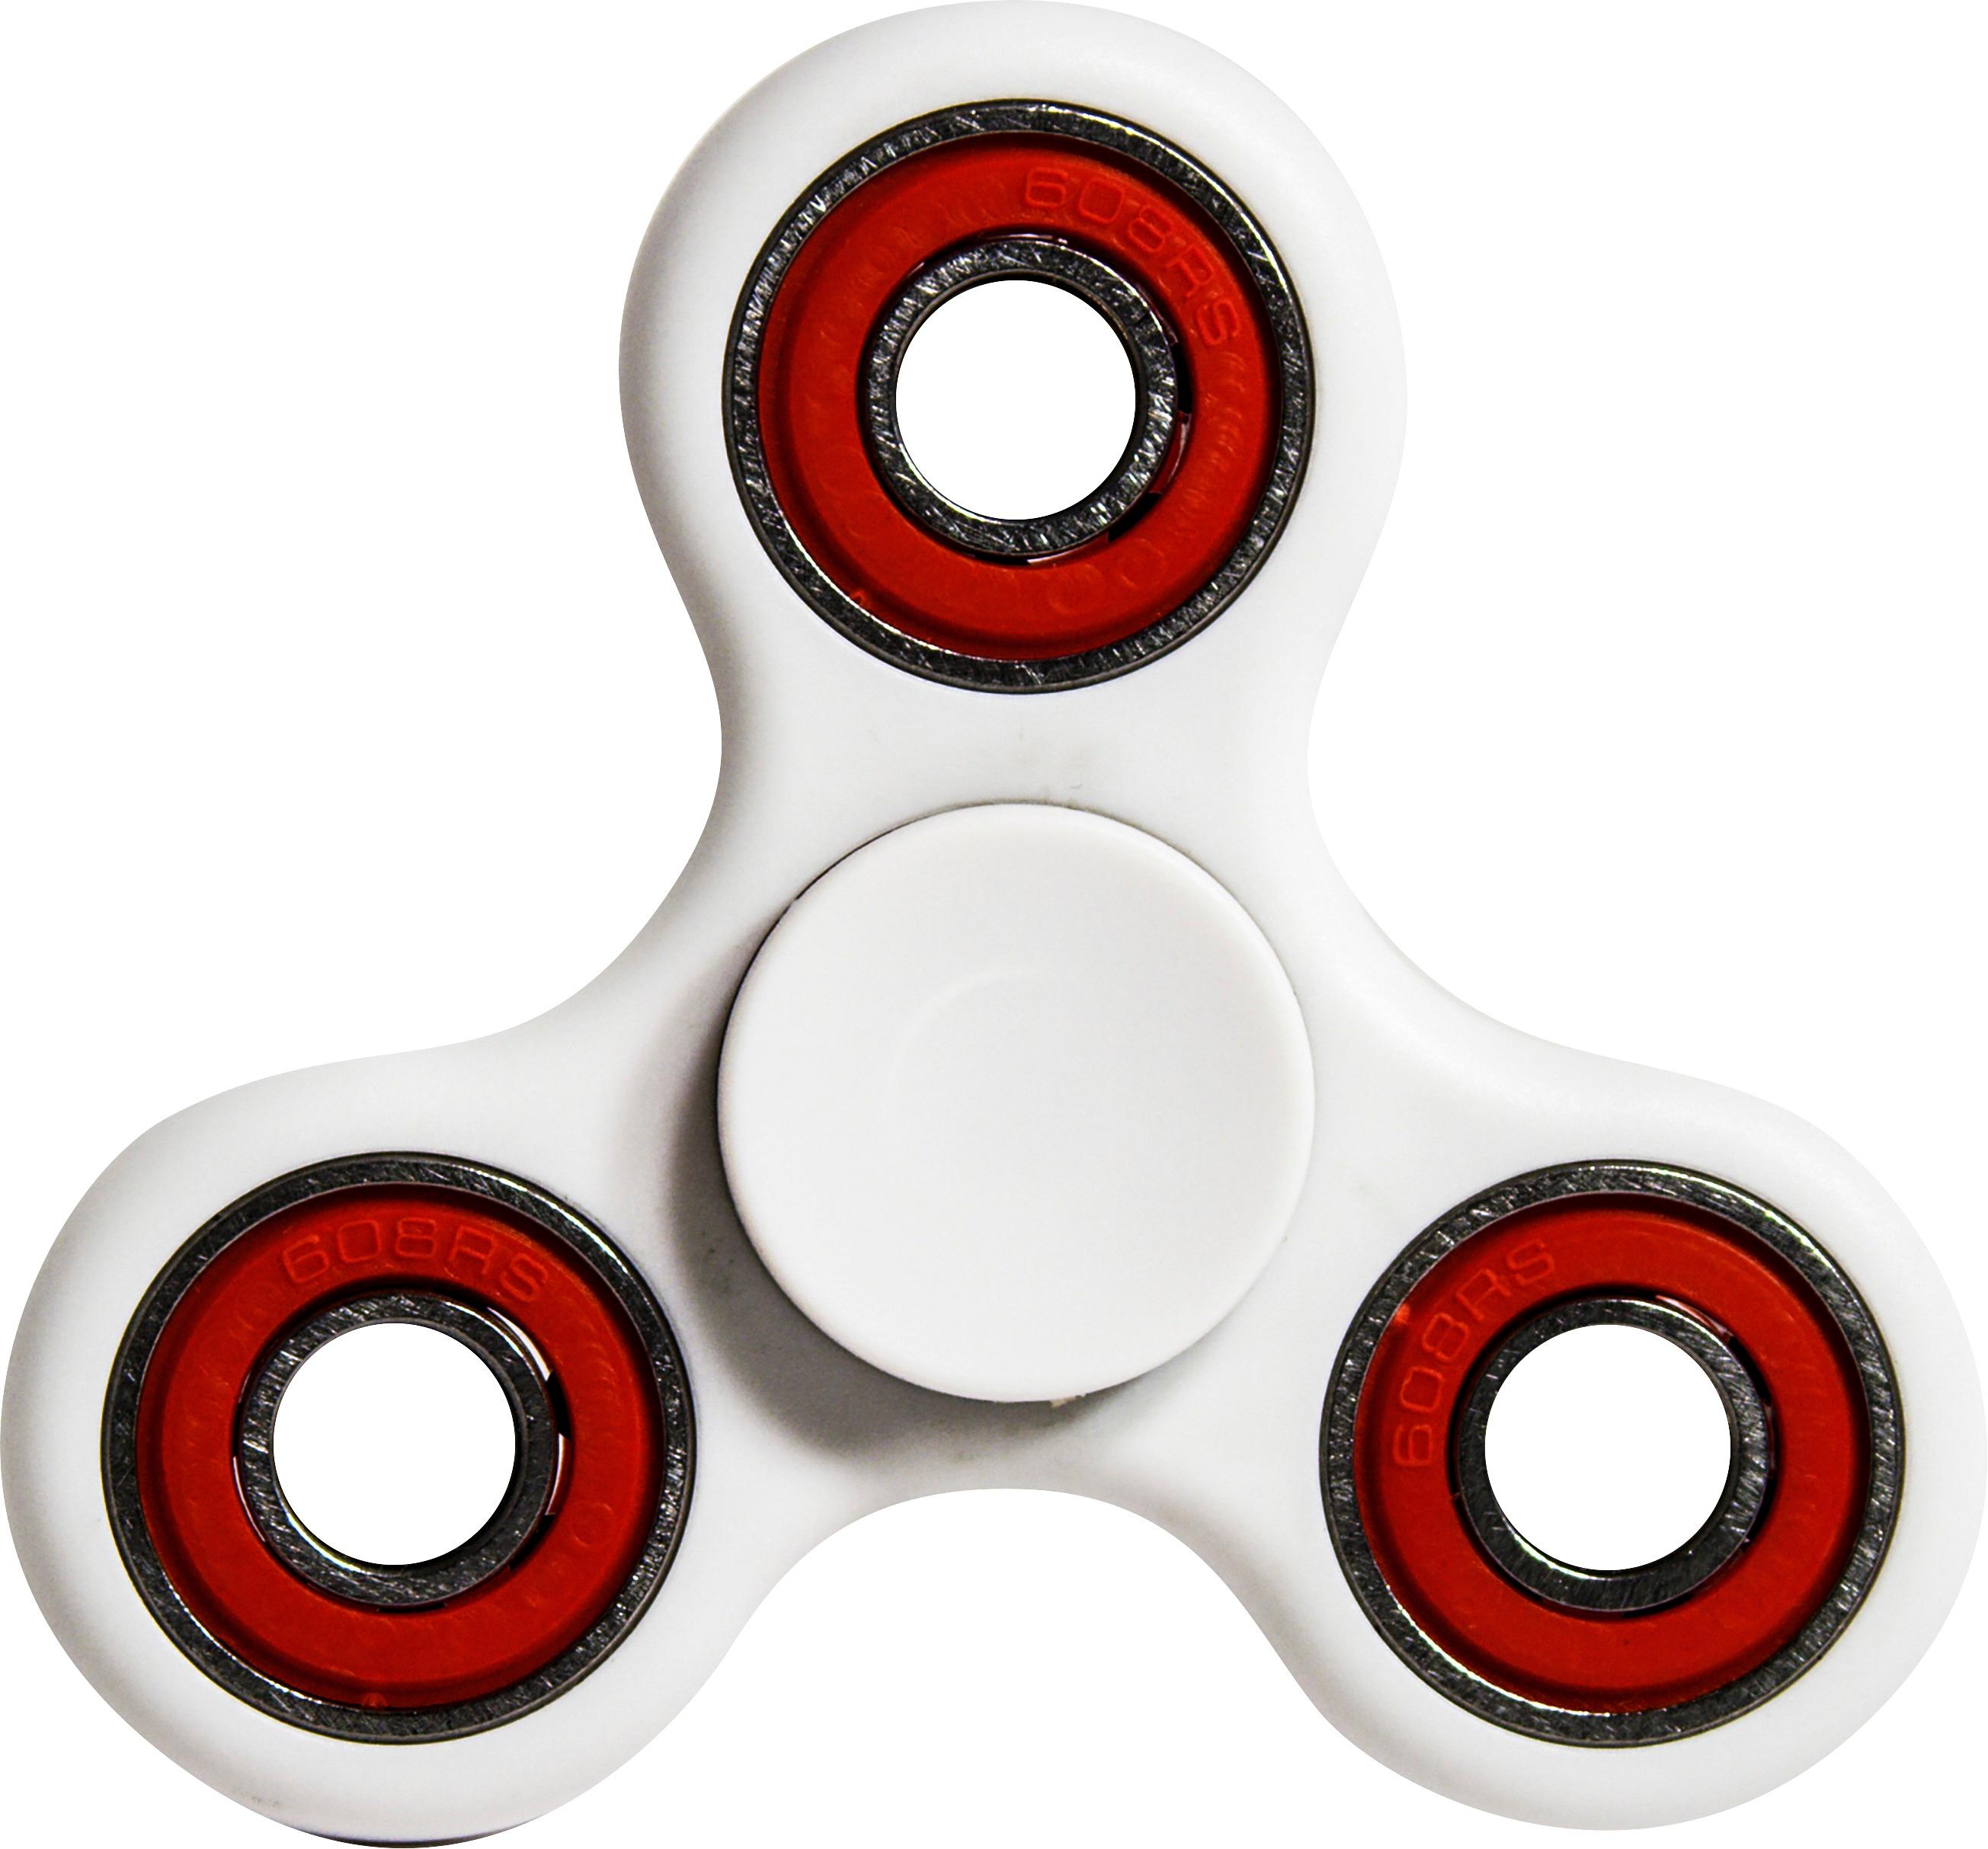 Fidget Spinner Toy Stress Reducer White/Red 5007 Best Buy